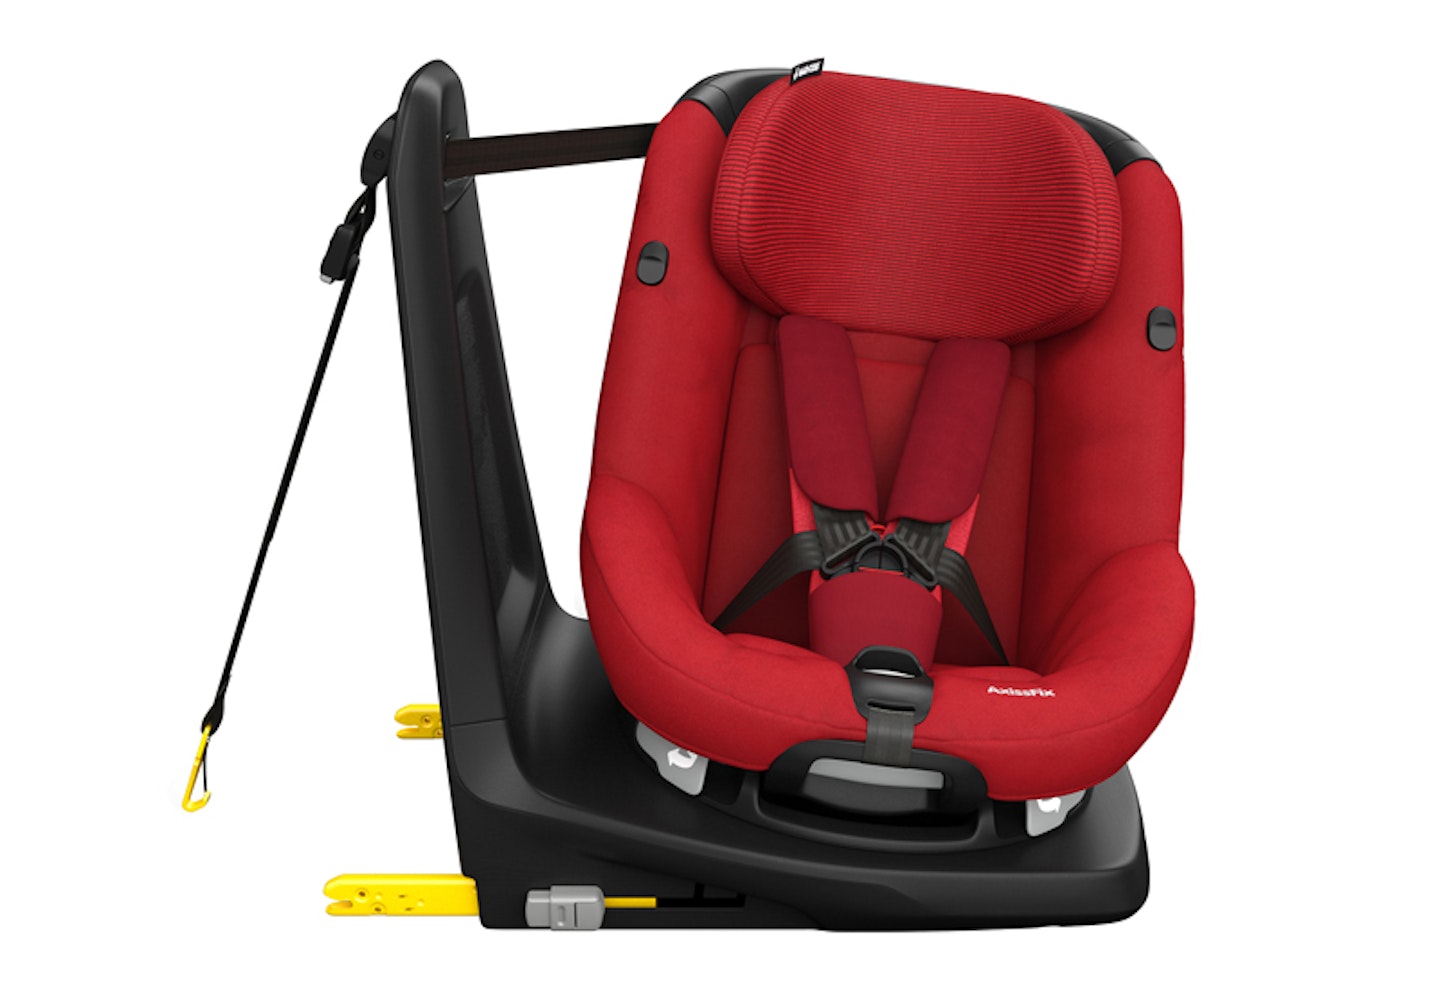 Maxii-Cosi AxissFix - the new i-Size swivel toddler car seat